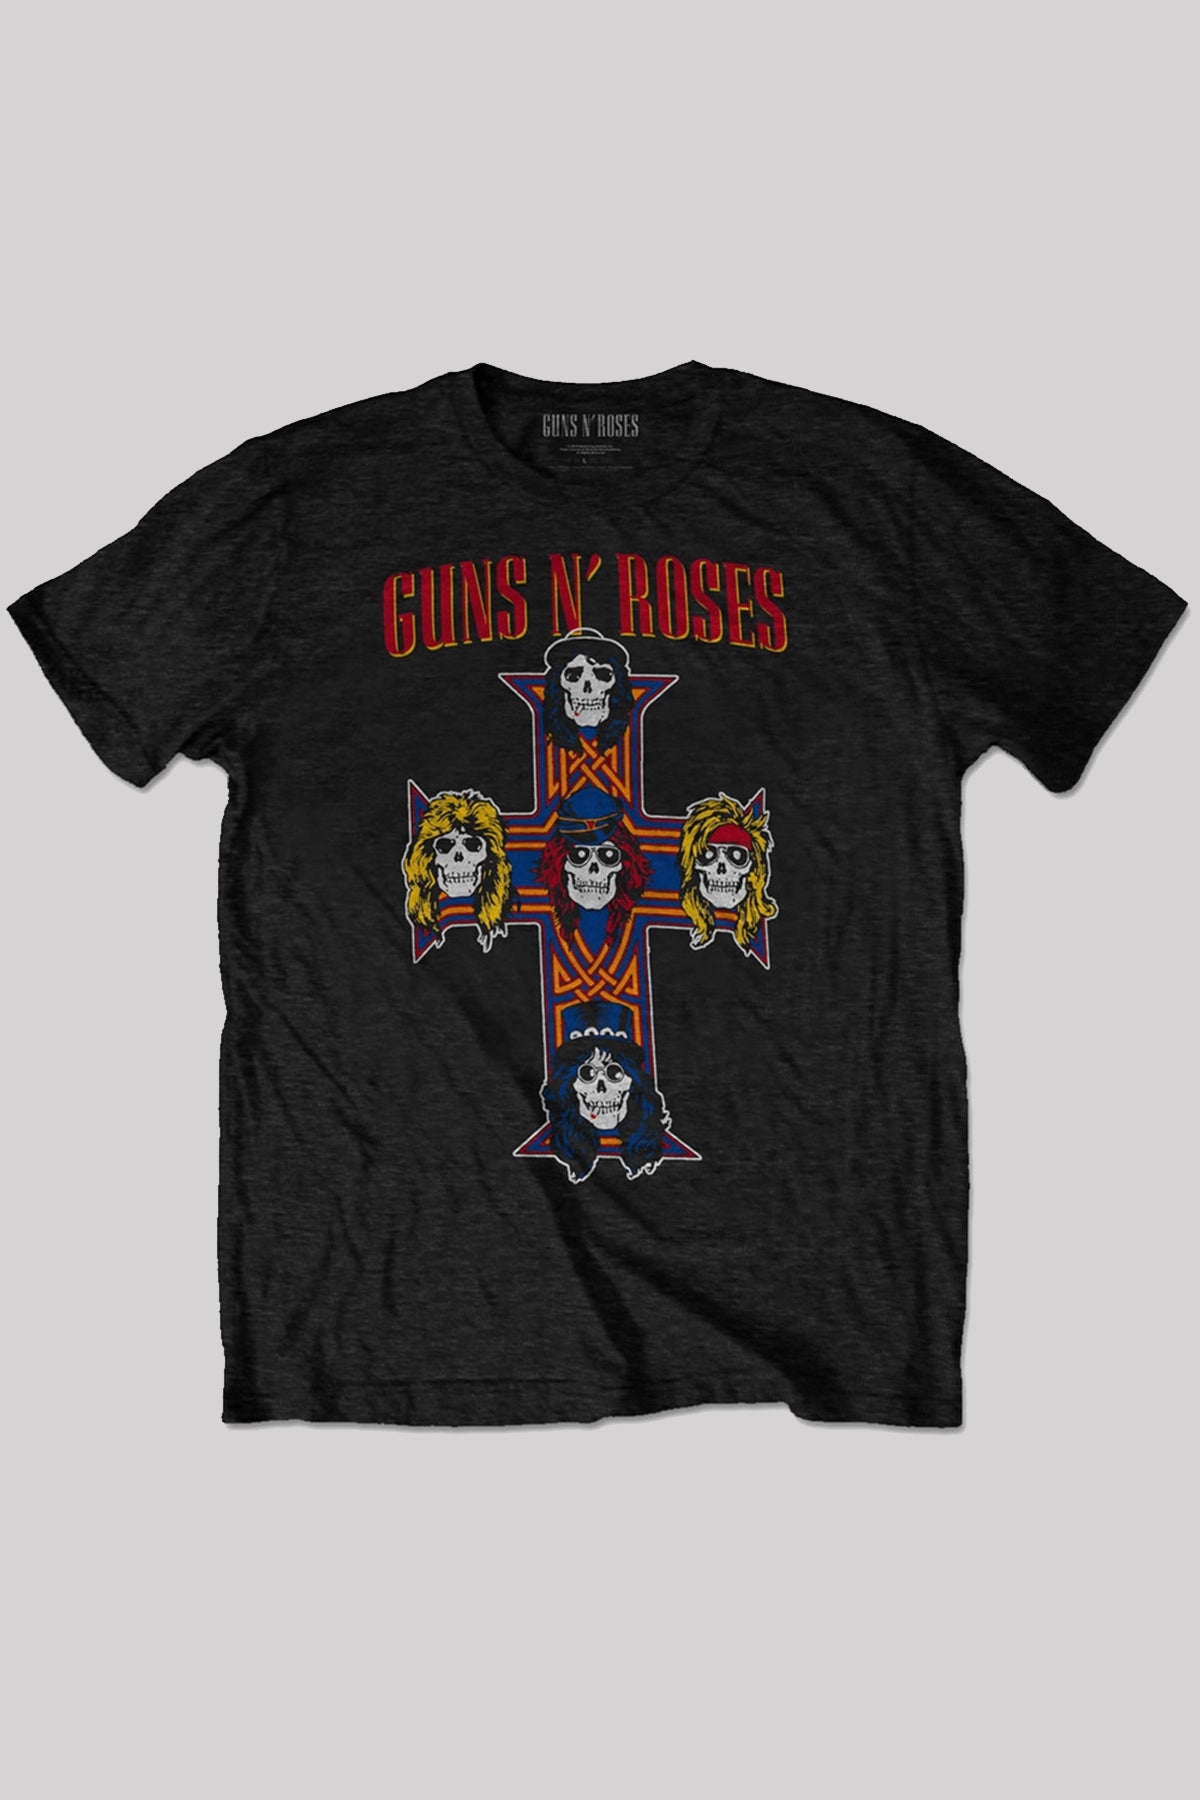 Guns N Roses Vintage Cross T-Shirt